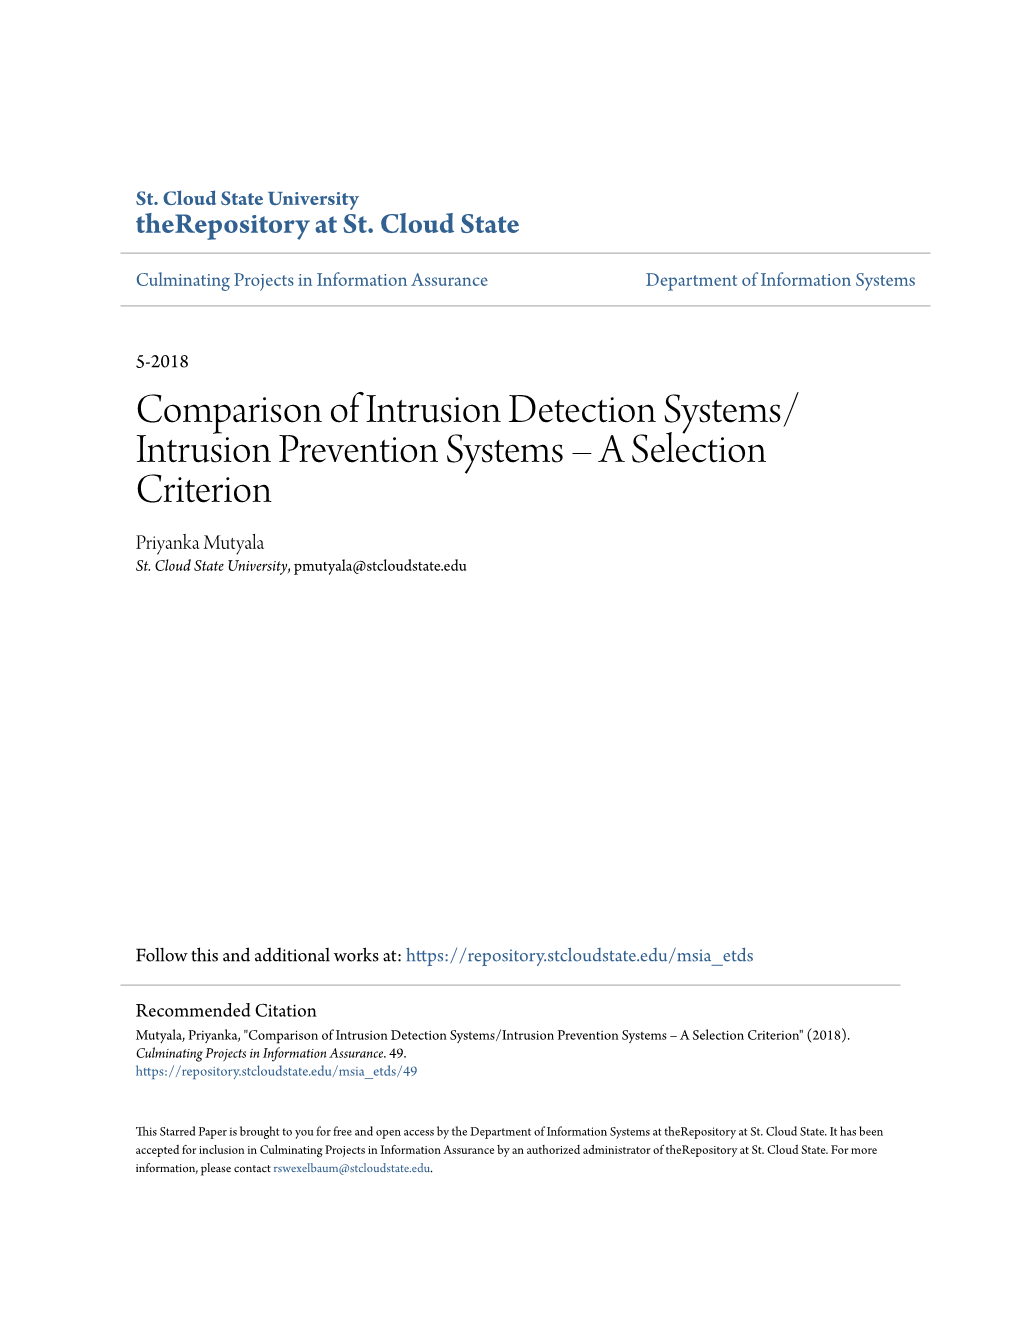 Comparison of Intrusion Detection Systems/Intrusion Prevention Systems – a Selection Criterion" (2018)